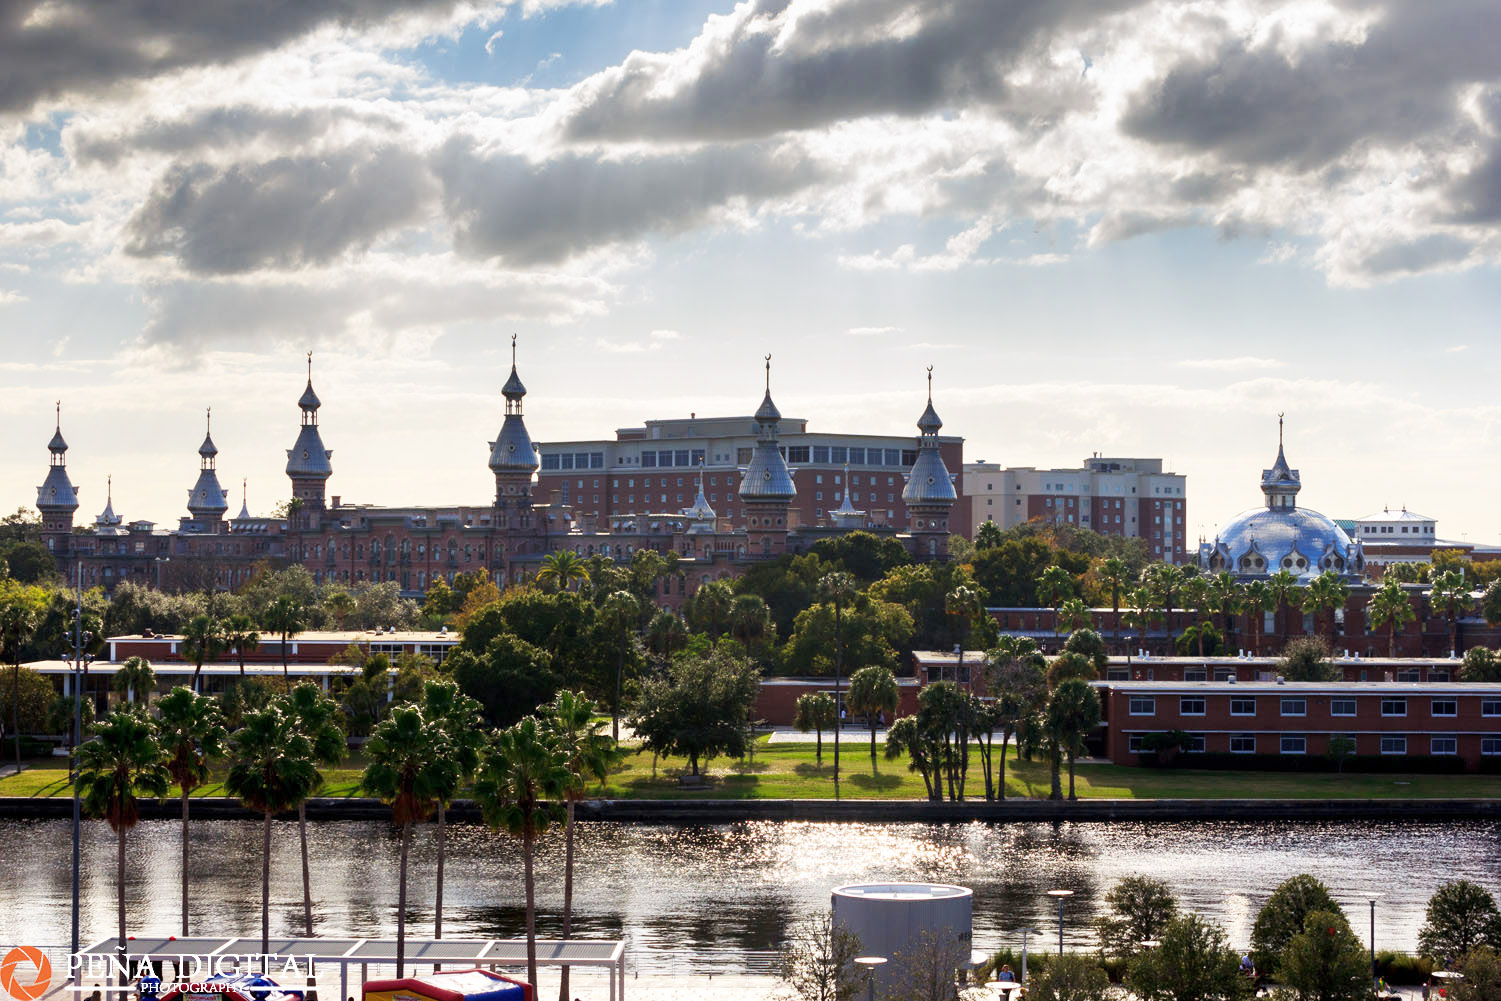  University  Of Tampa  Bay Photo Shoot Pena Digital 